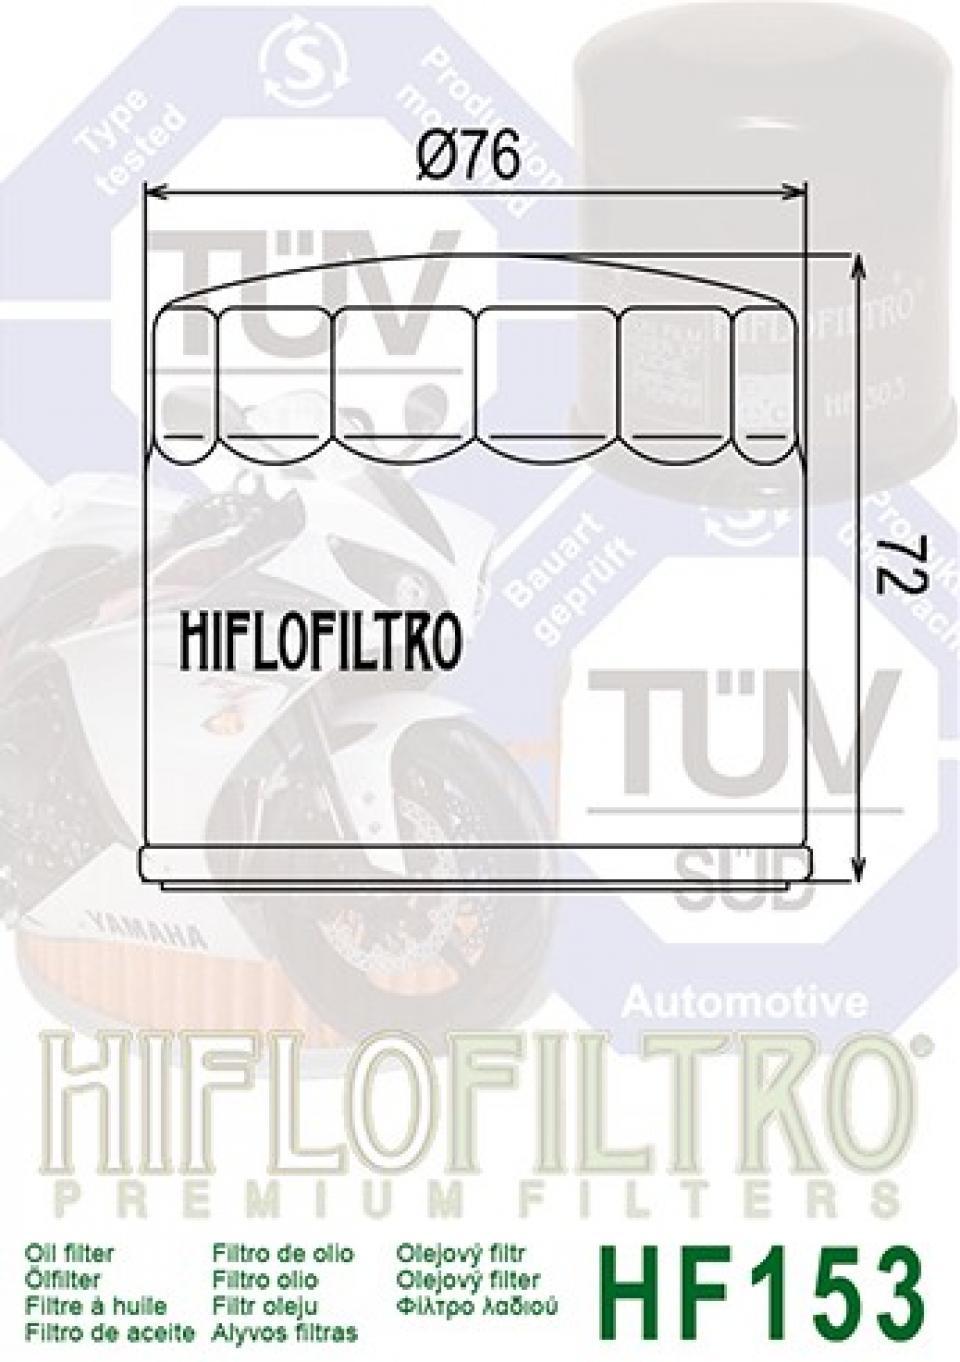 Filtre à huile Hiflofiltro pour Moto Ducati 821 Hyperstrada 2013 à 2015 HF153 Neuf